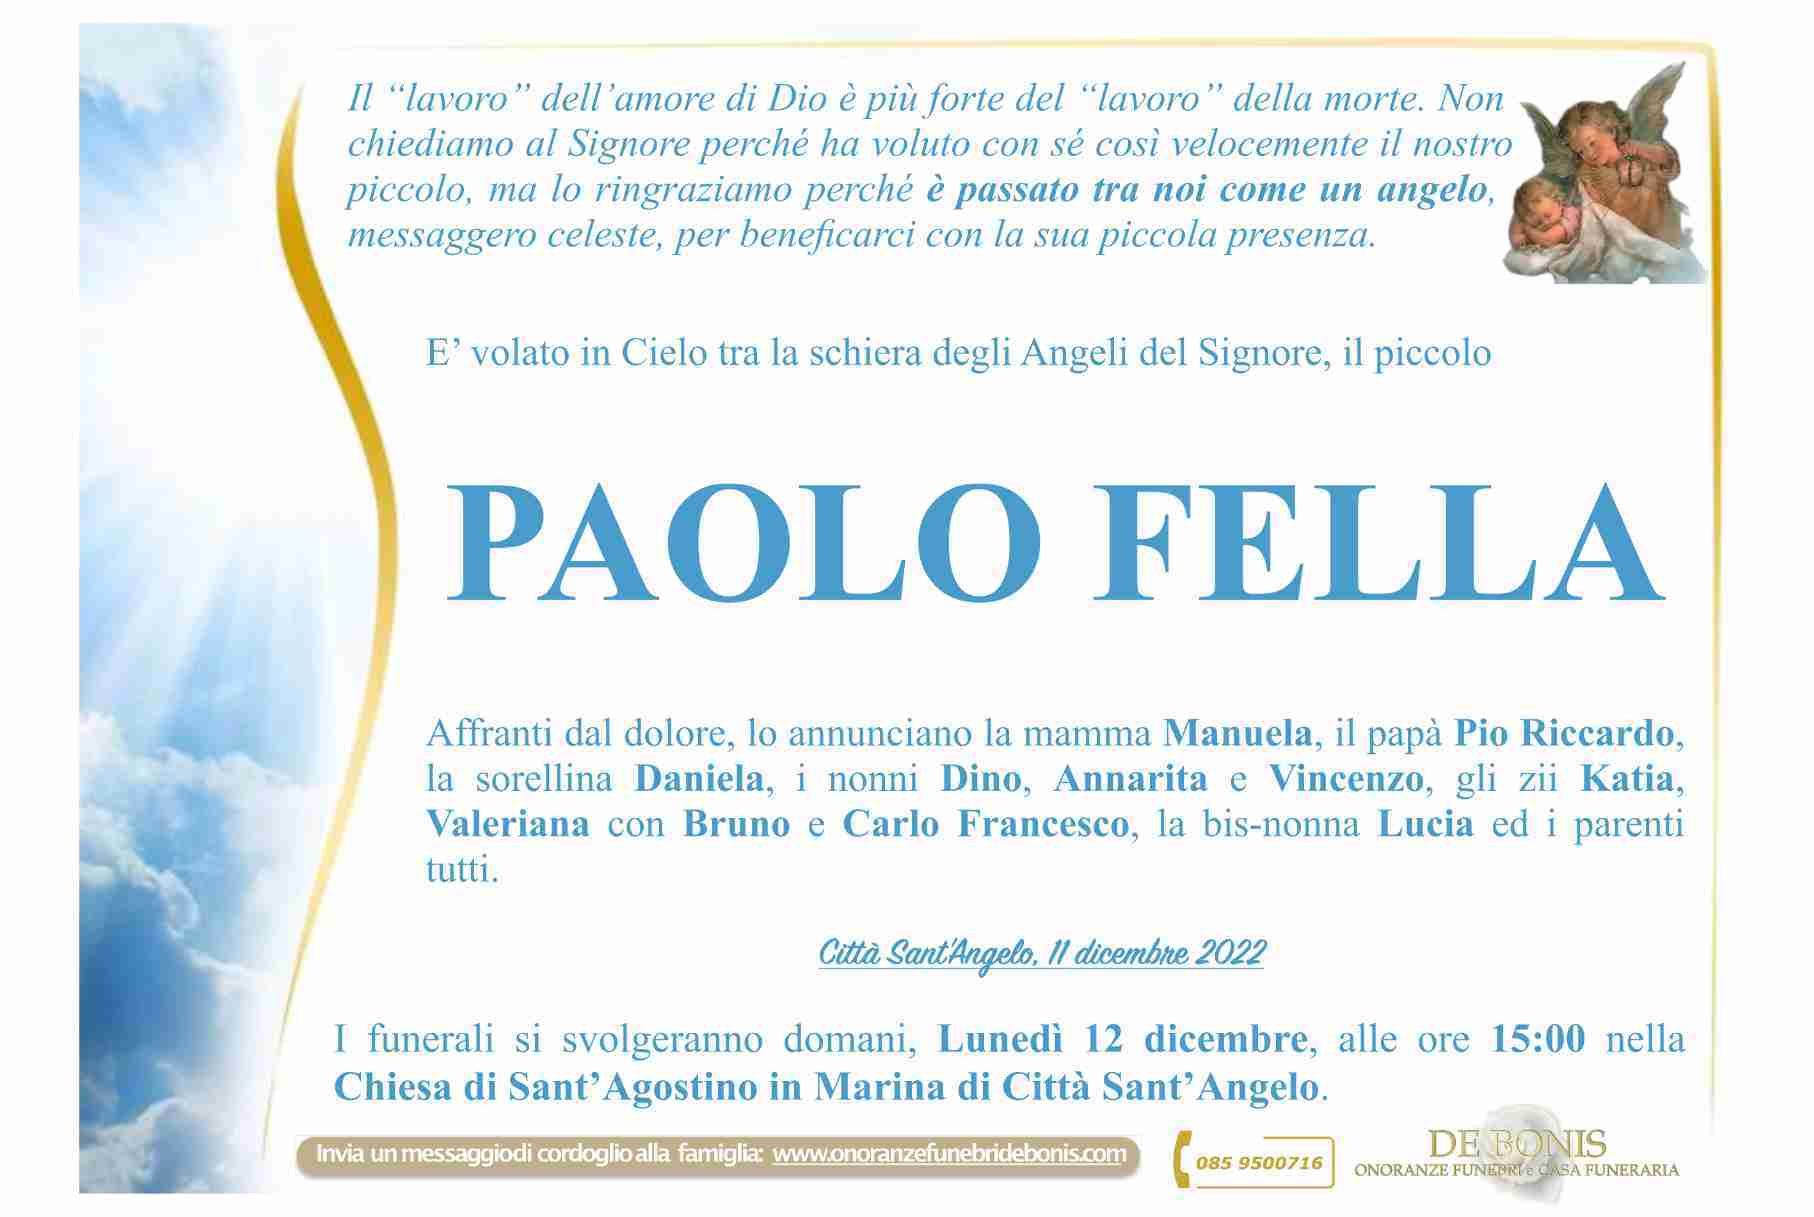 Paolo Fella